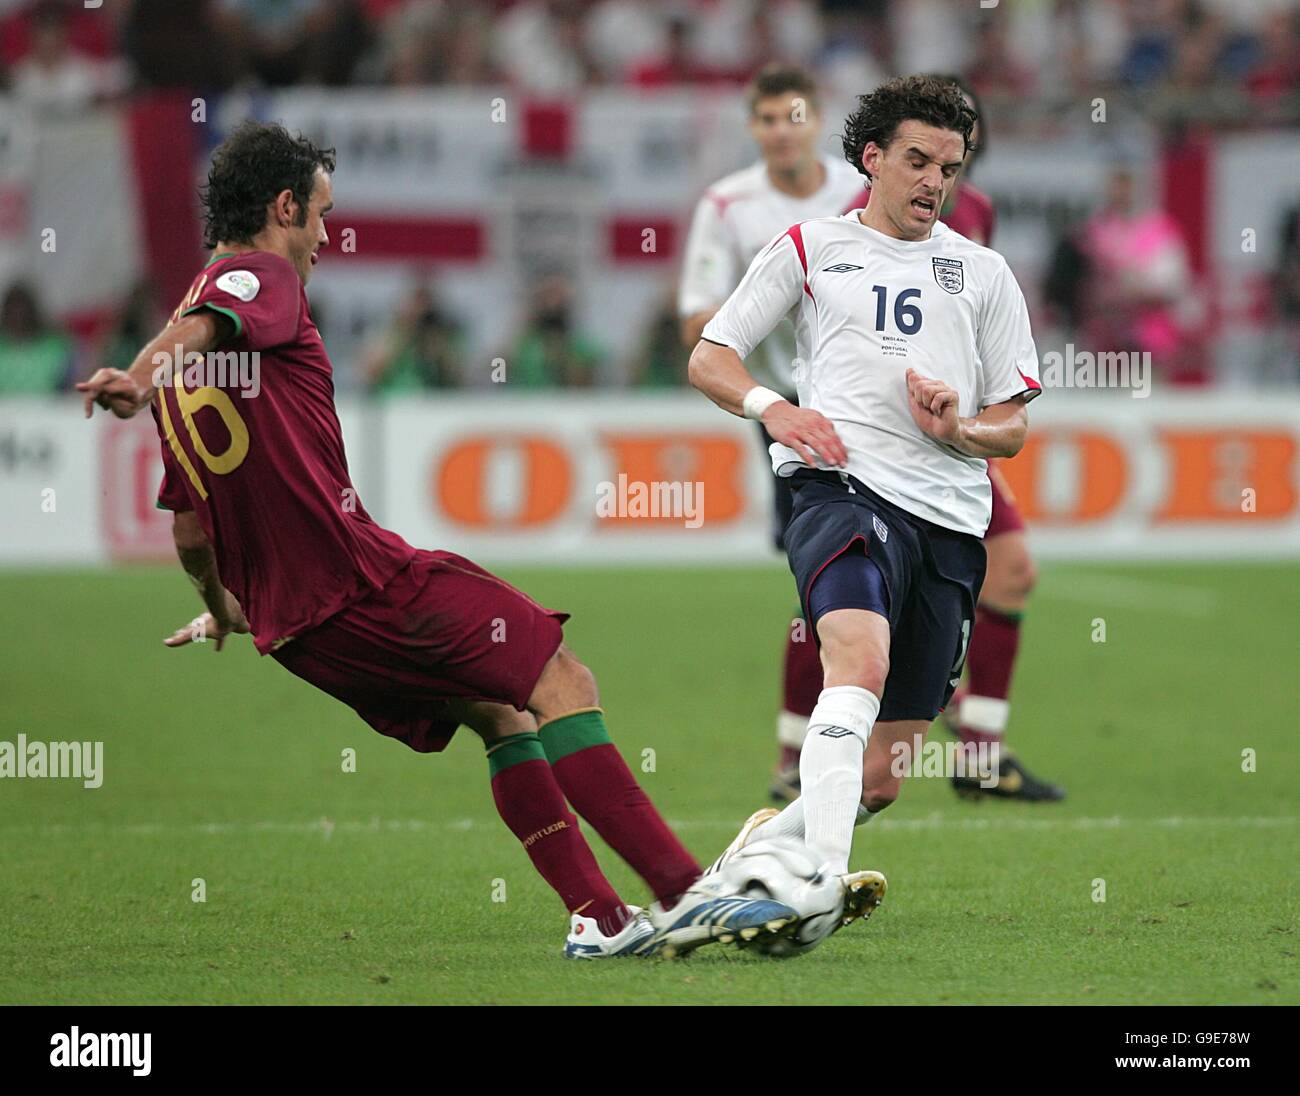 Soccer - 2006 FIFA World Cup Germany - Quarter Final - England v Portugal - AufSchalke Arena. Owen Hargreaves, England and Alberto Ricardo Carvalho, Portugal battle for the ball Stock Photo